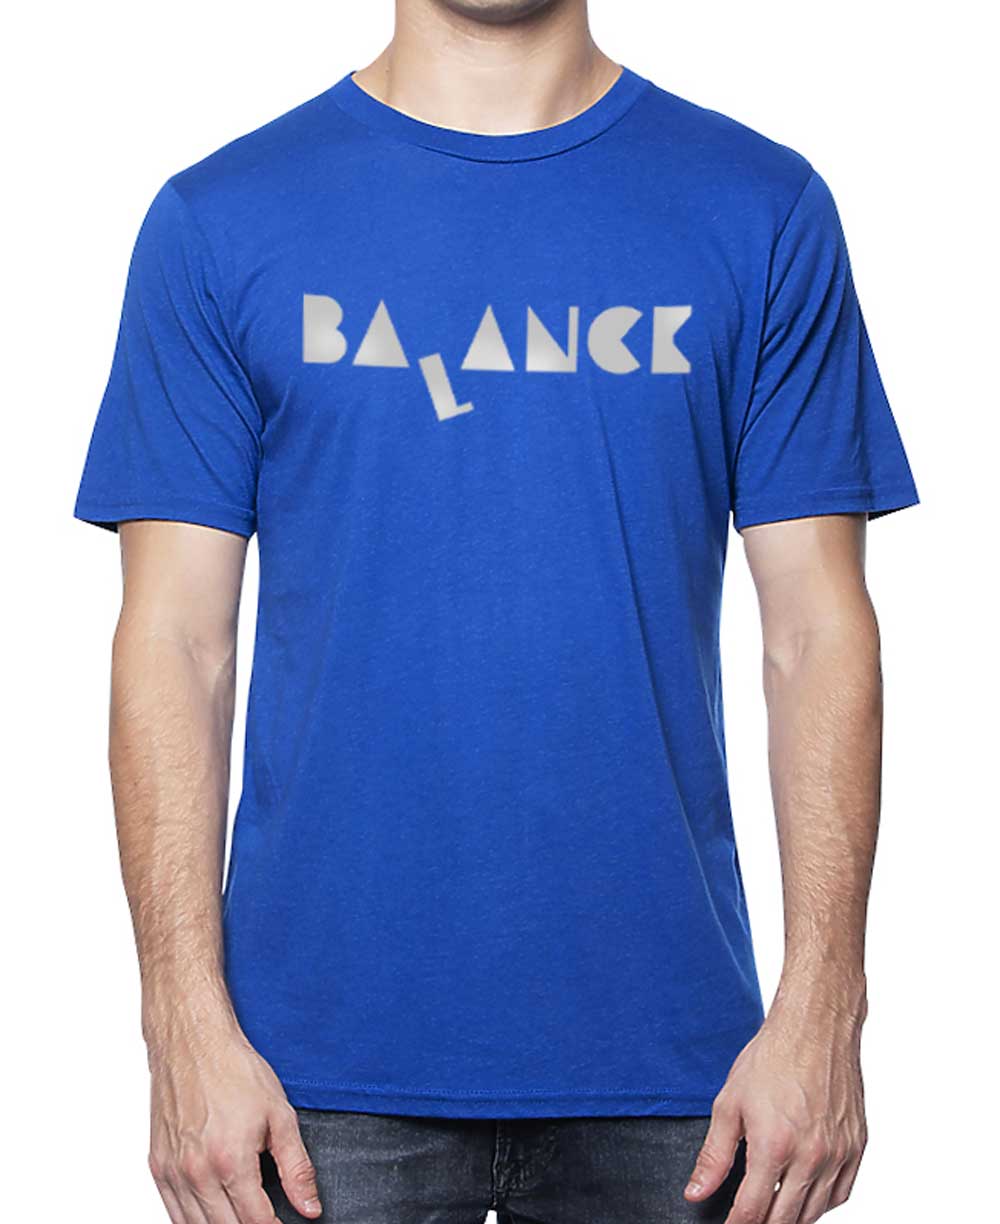 Men’s Balance Organic Cotton And Bamboo Blue T-Shirt, Made in USA - Shirts & Tops S